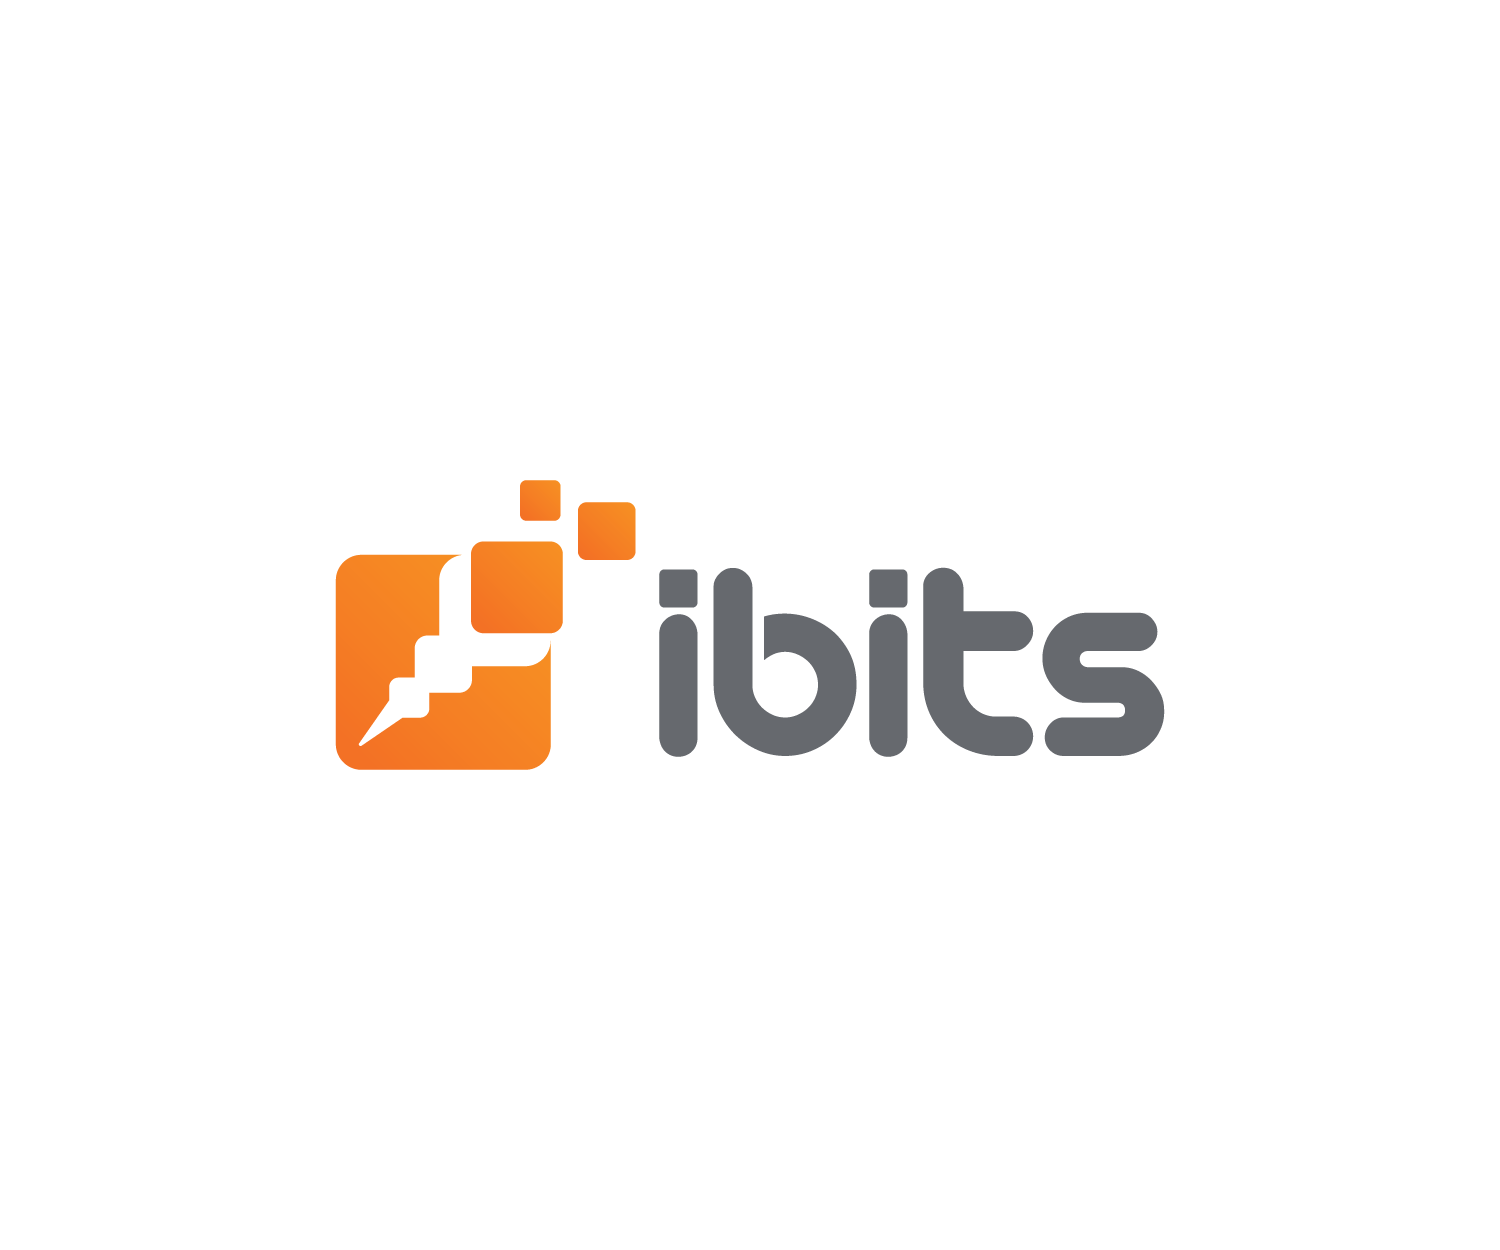 ISP Logo - Elegant, Playful, Isp Logo Design for ibits by Mario. Design